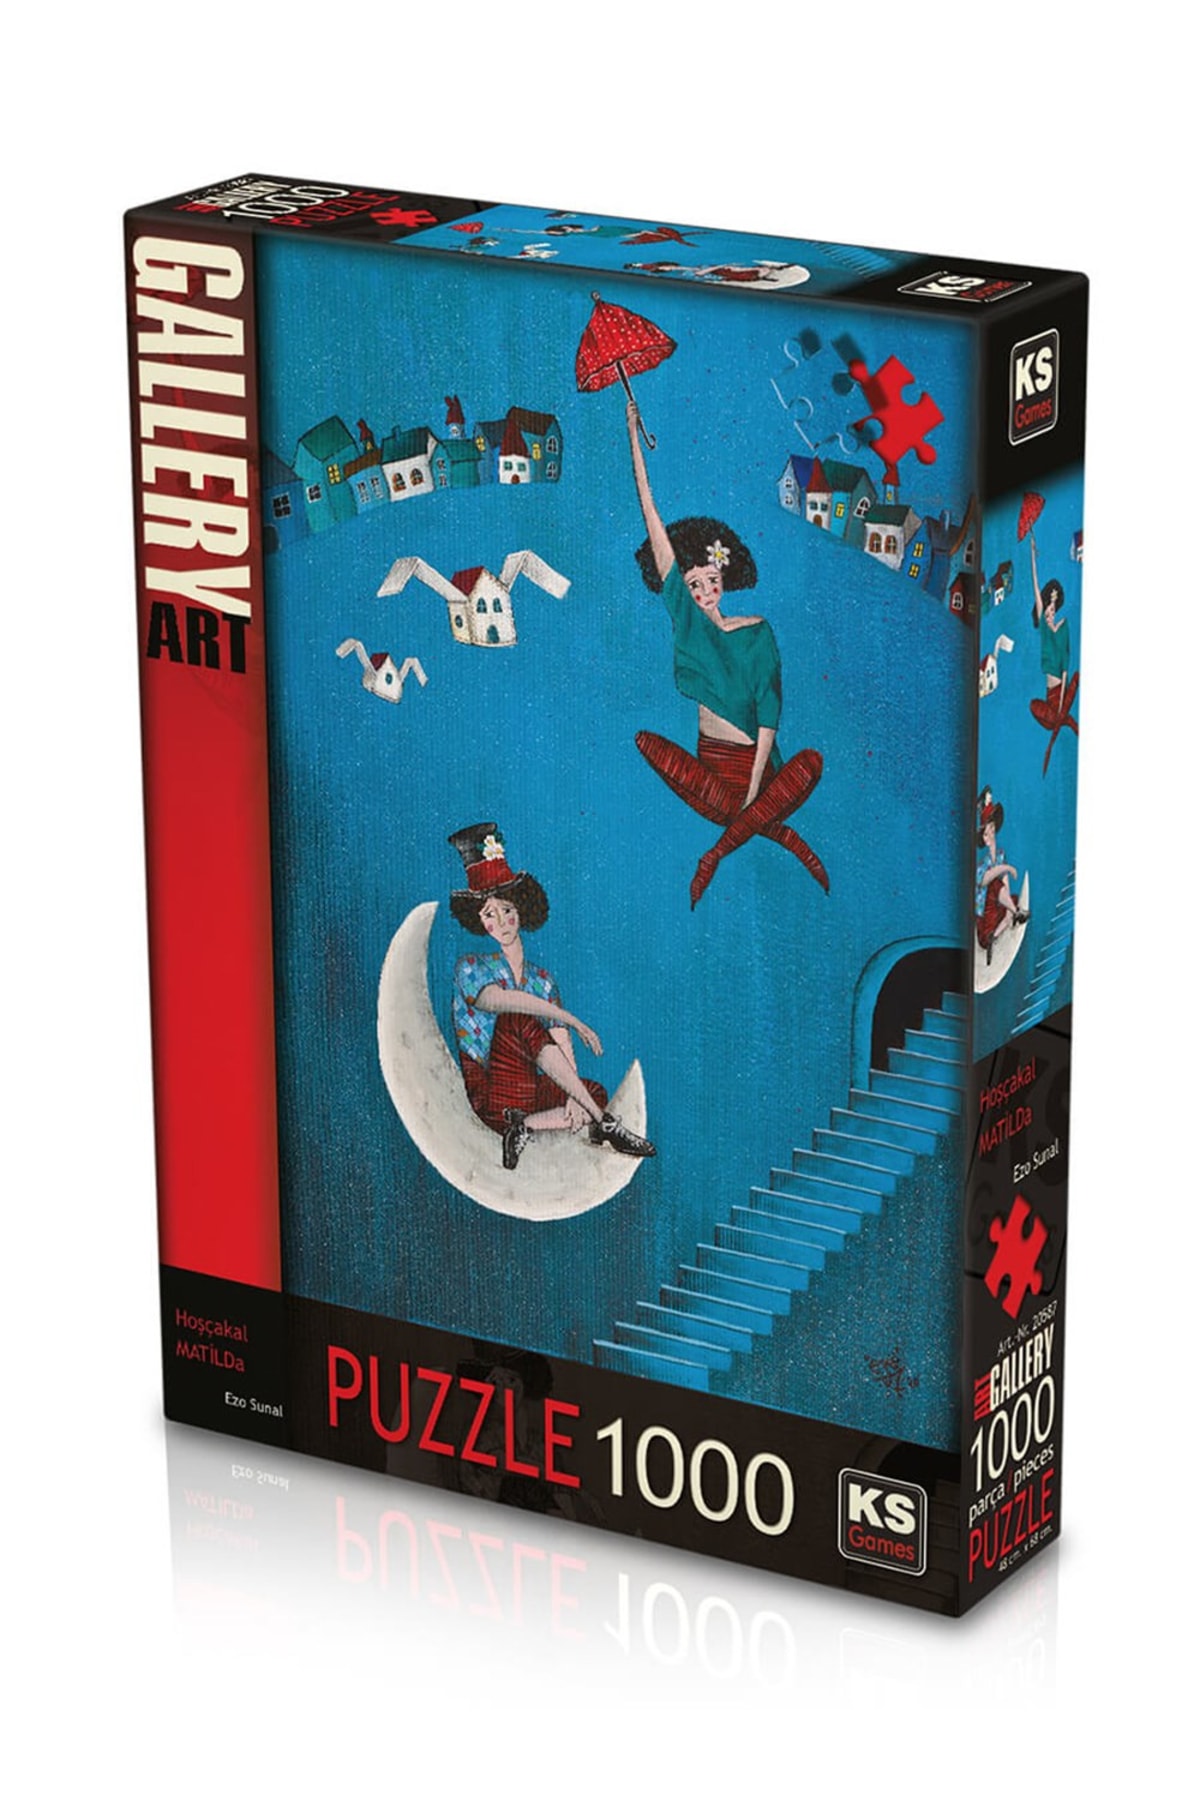 Ks Puzzle Hoşçakal Matilda Ezo Sunal 1000 Parça Puzzle Ks Games